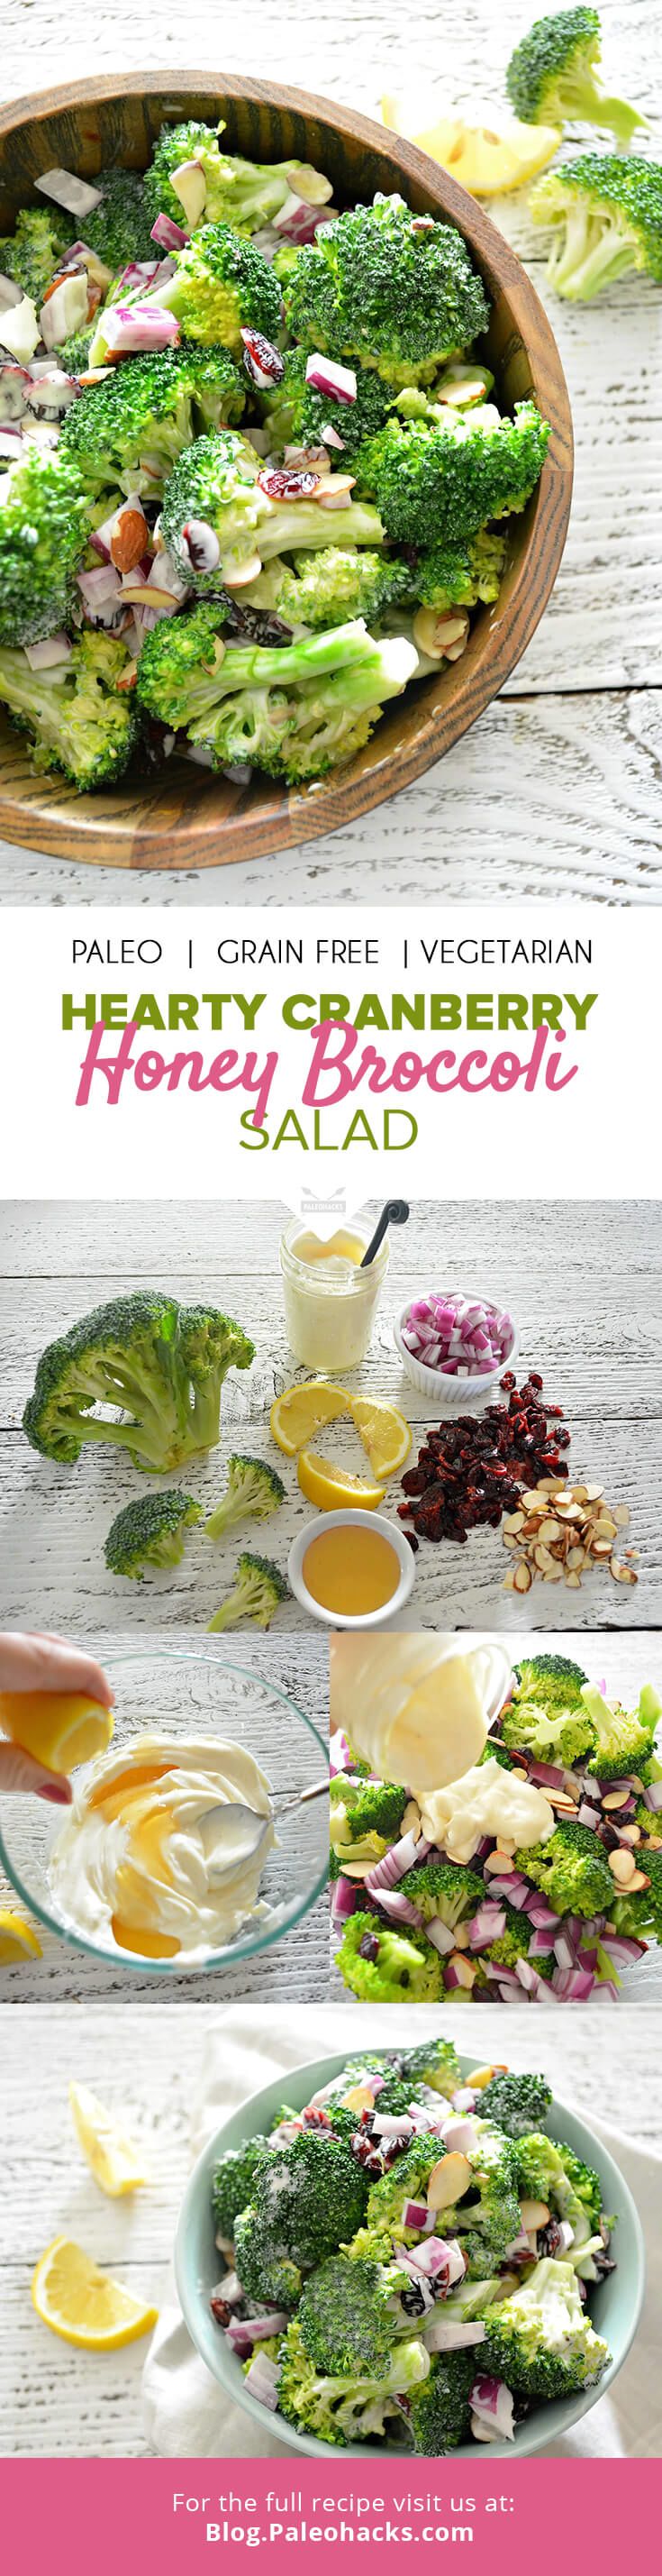 honey broccoli salad pin